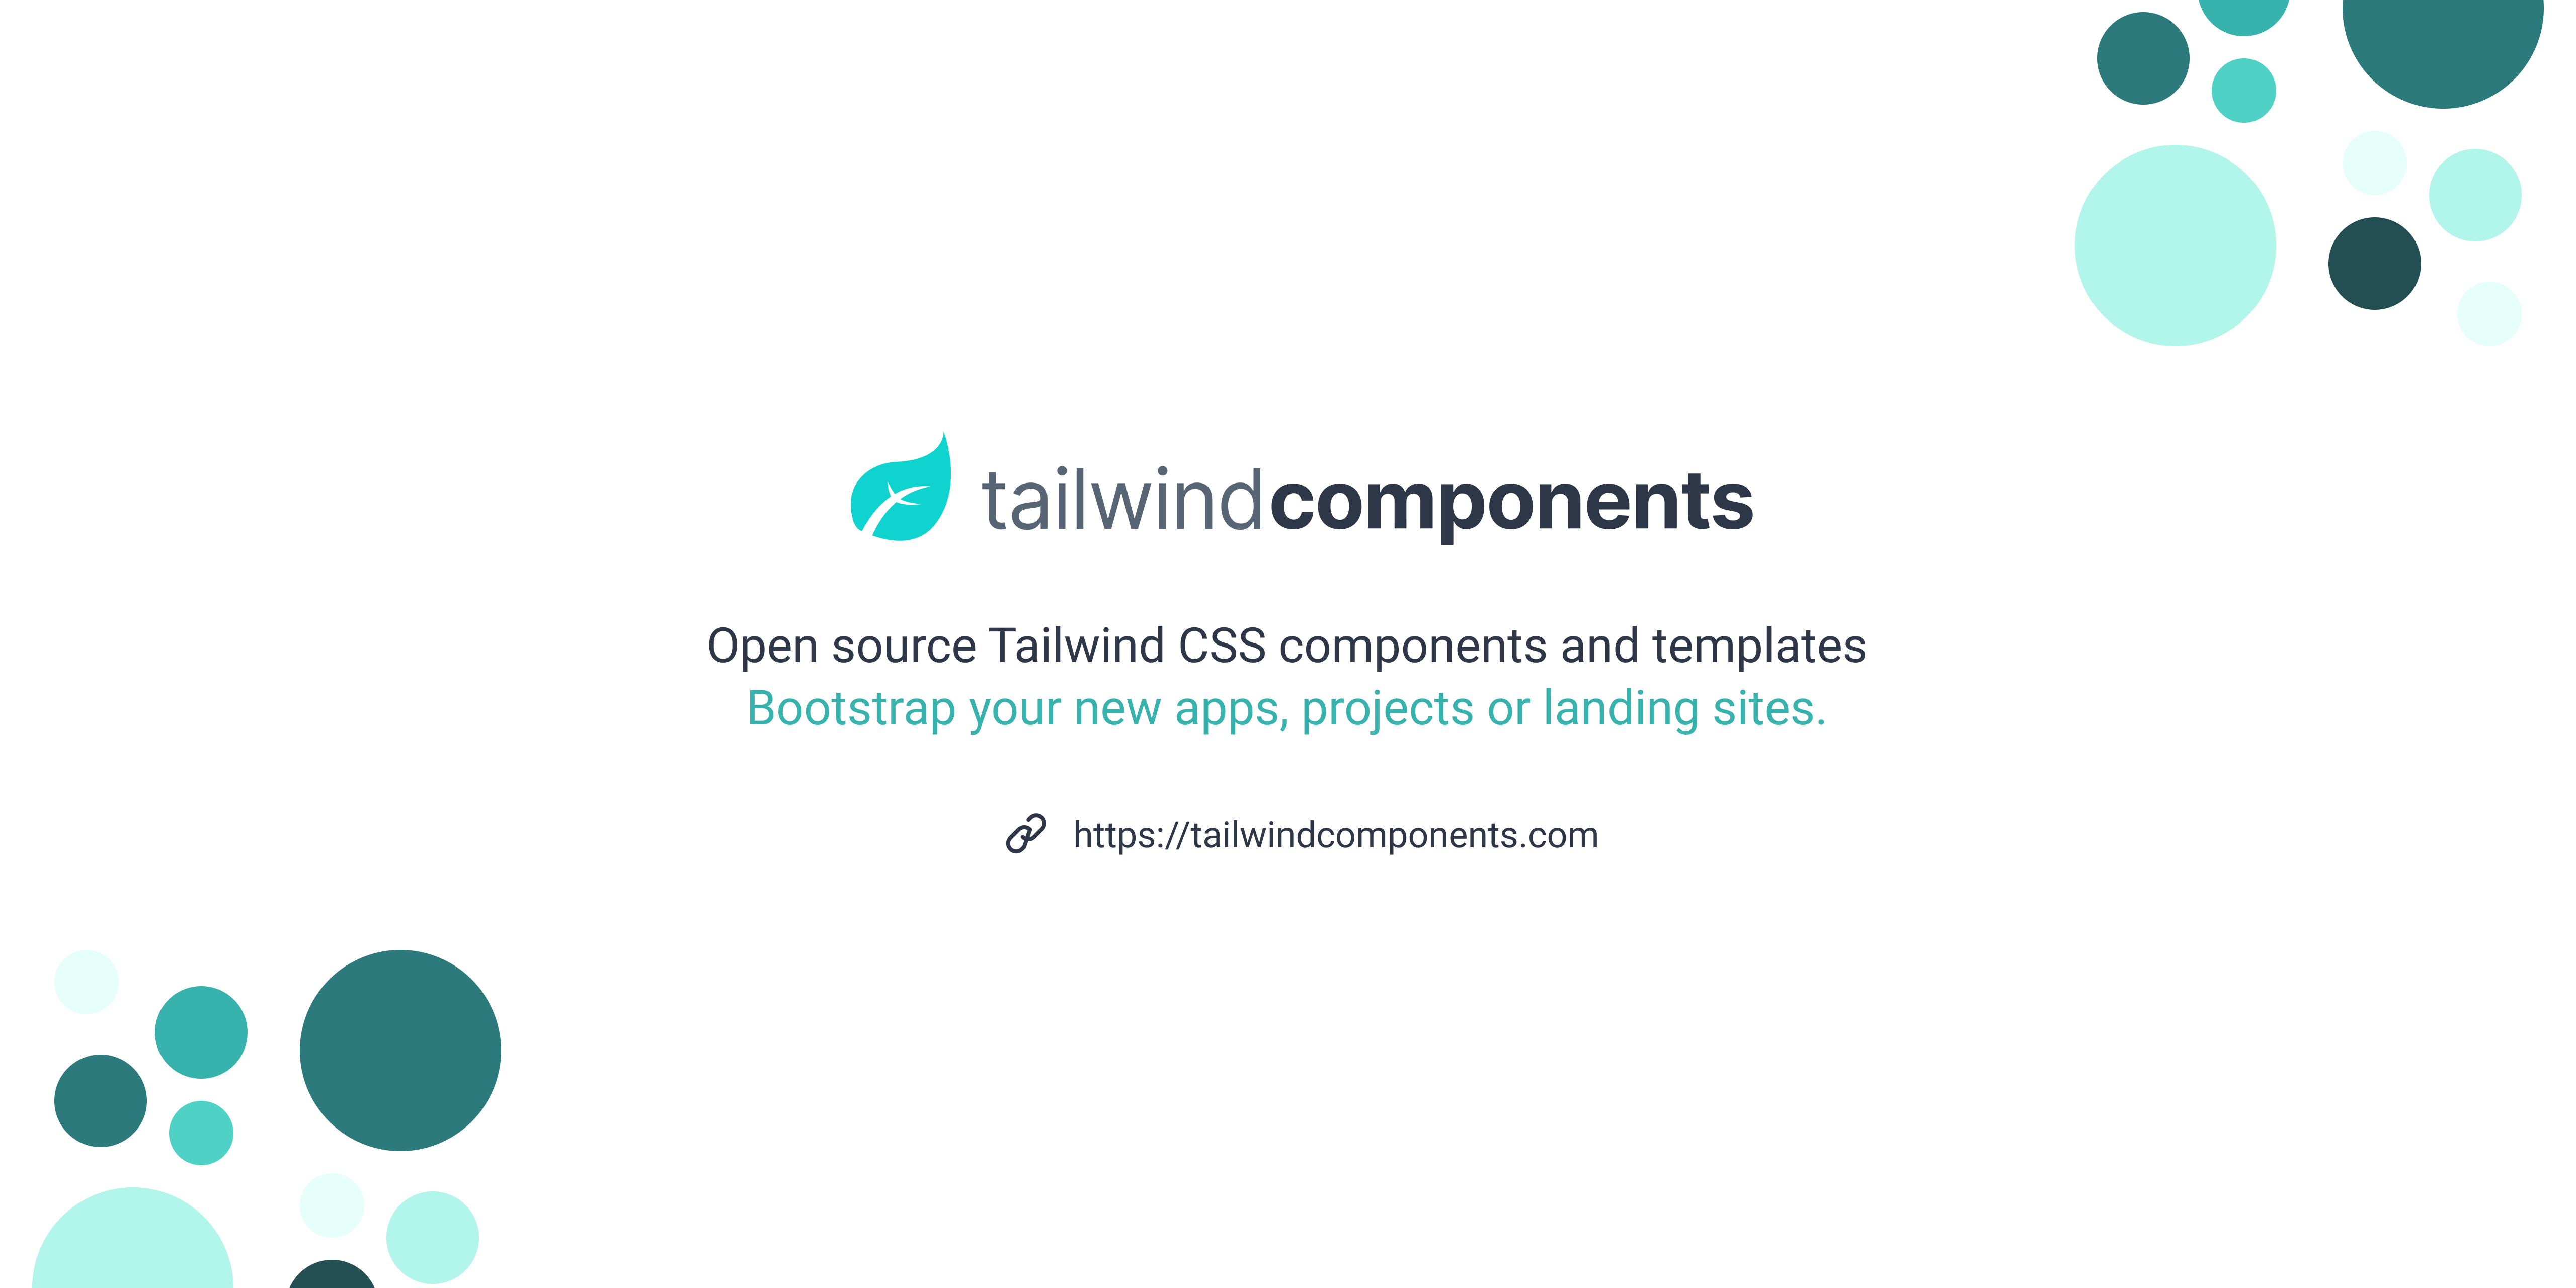 tailwindcomponents.com